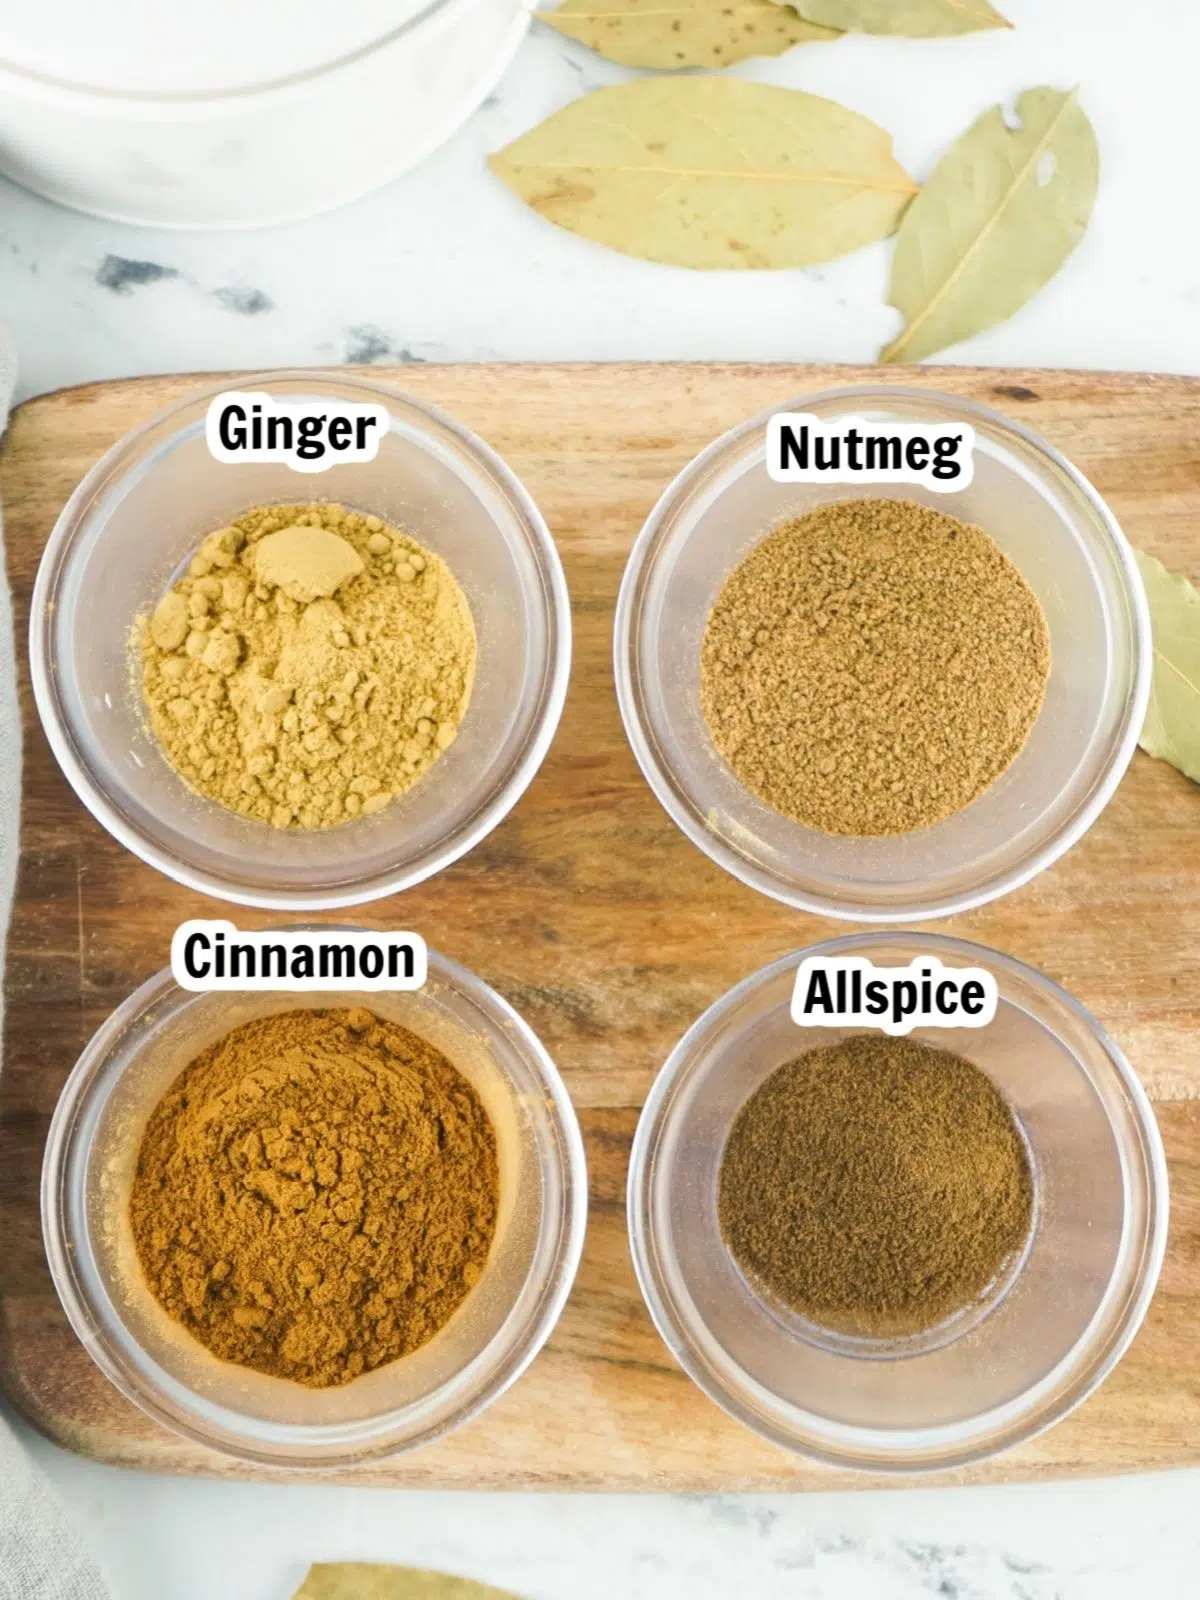 Ingredients for pumpkin pie spice mix in glass jars.